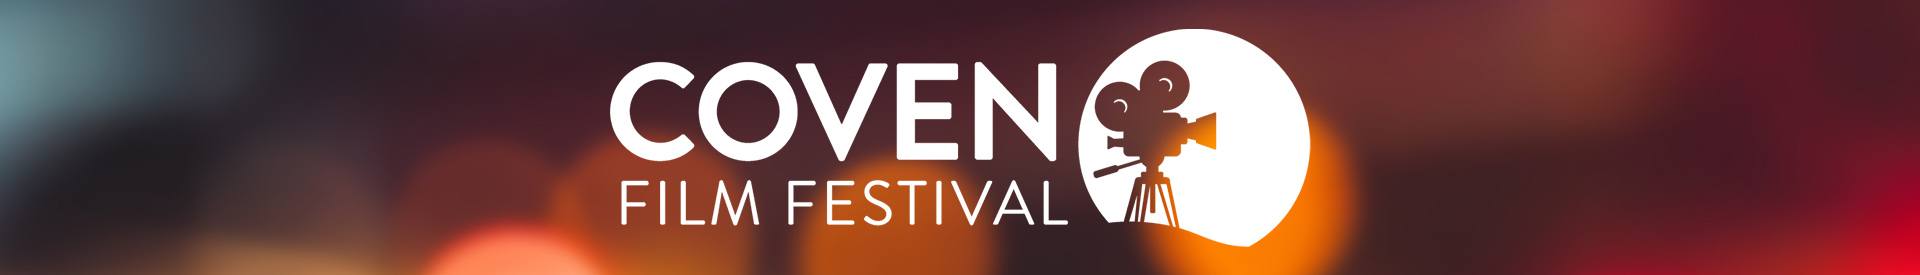 COVEN Film Festival